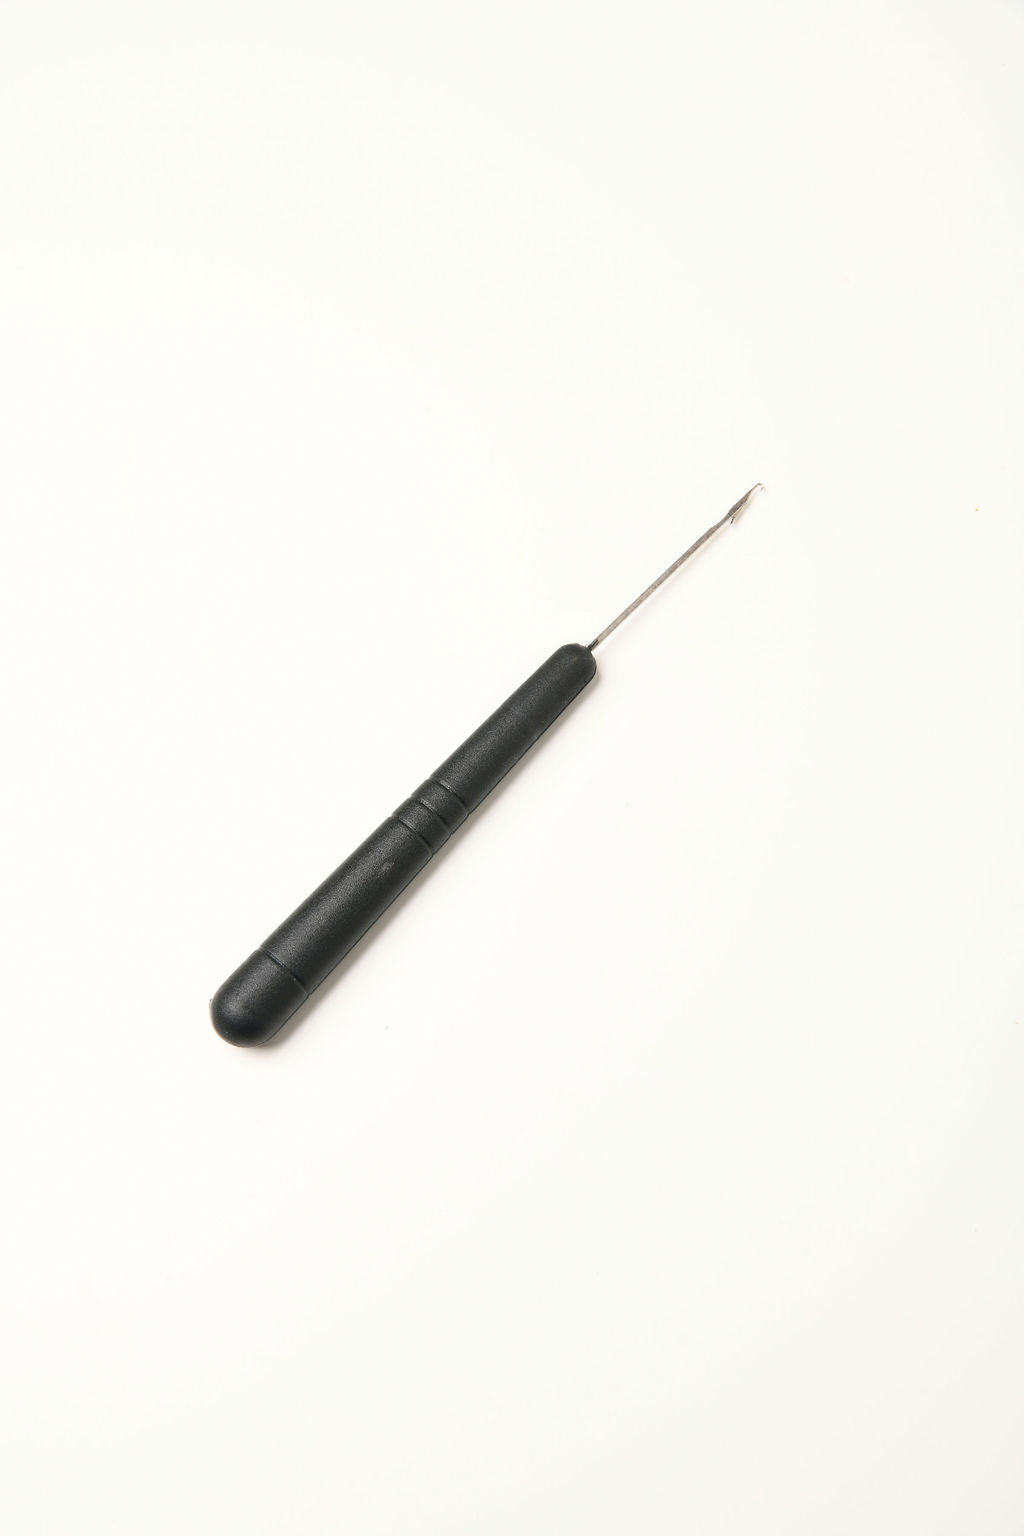 Metowi Method Pulling Needles for Micro Links